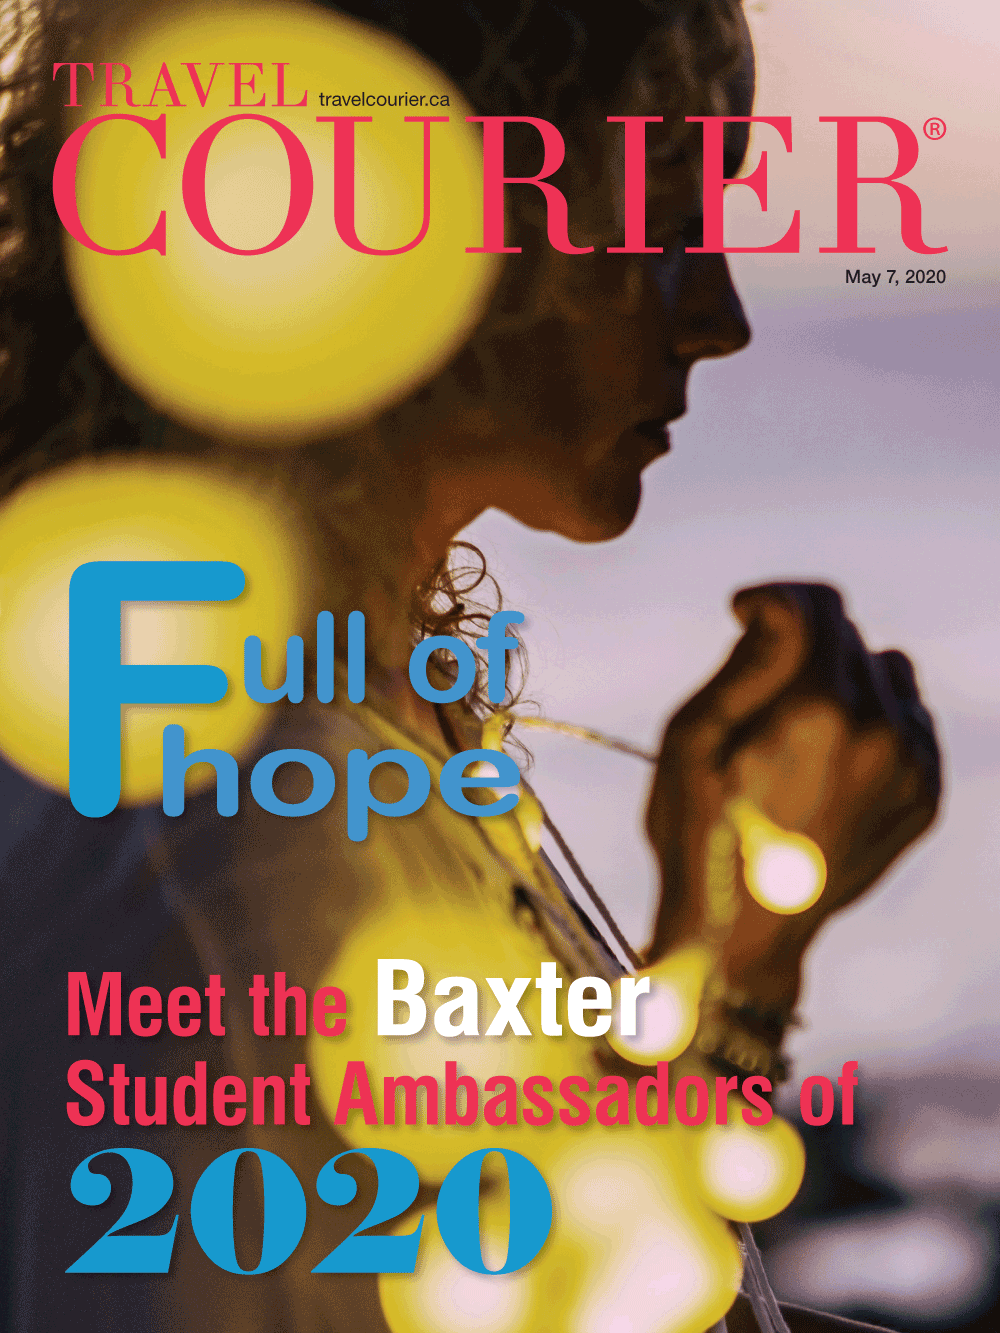 Baxter Student Ambassador Program 2020